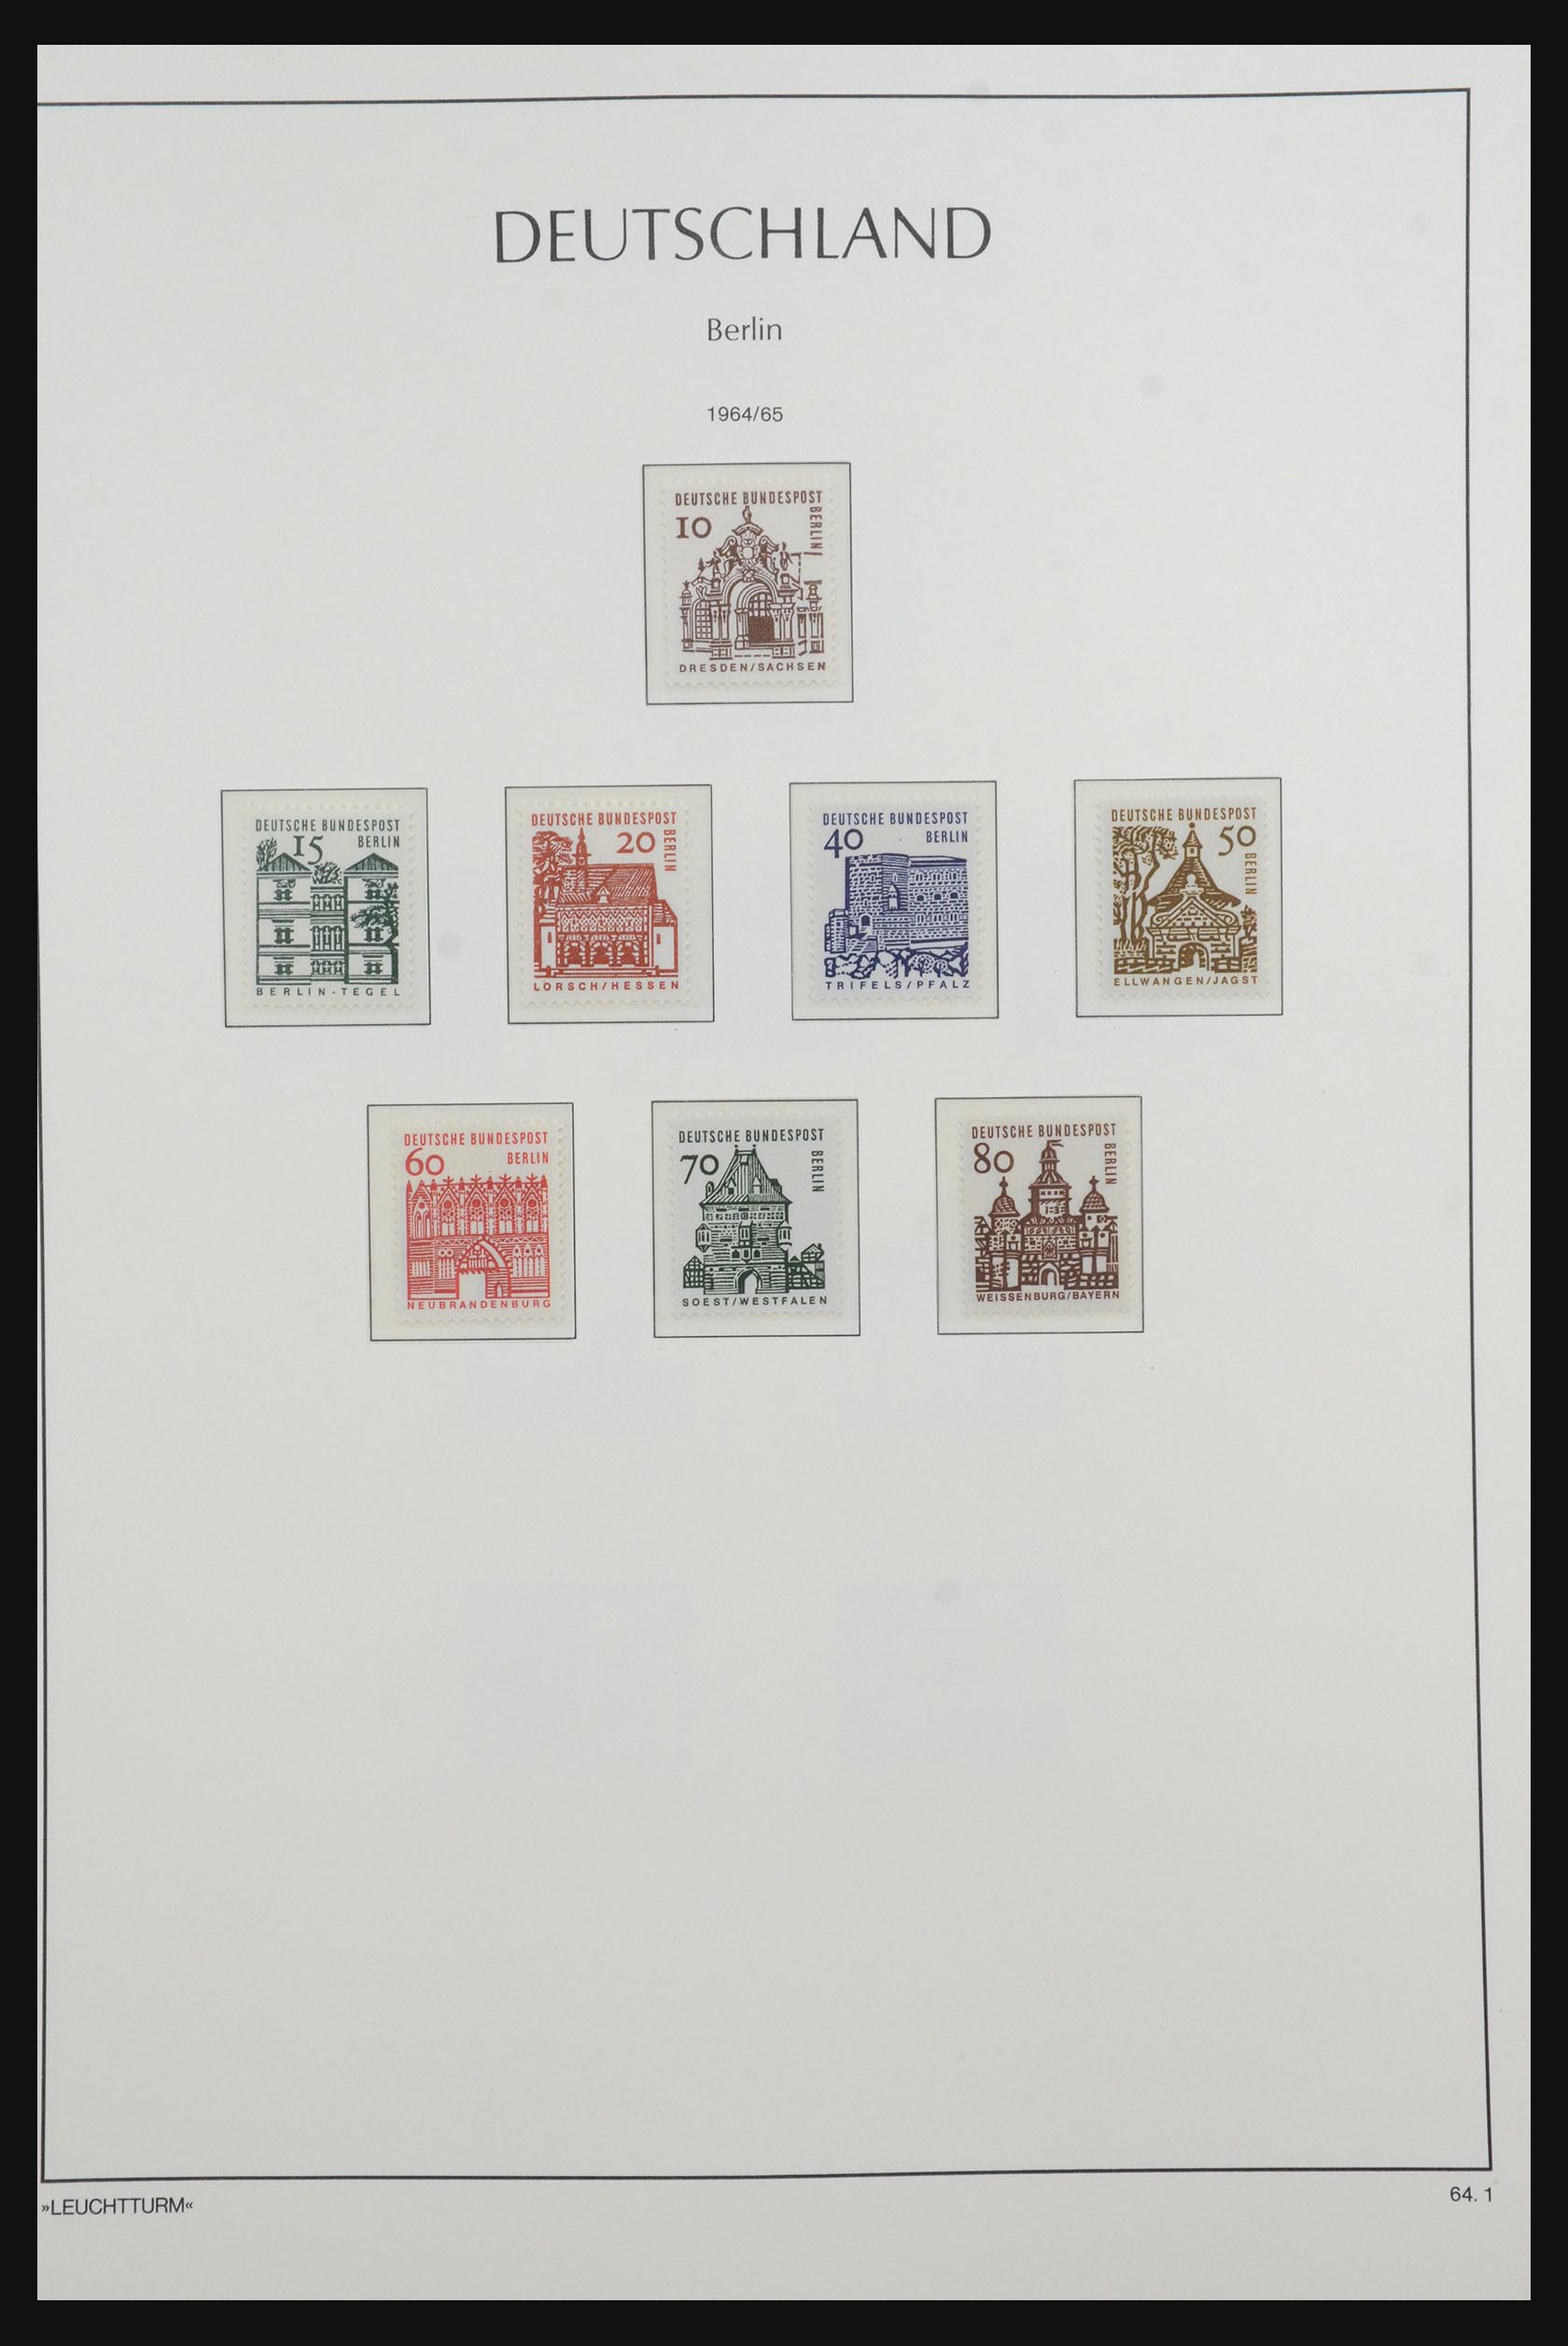 31601 020 - 31601 Bundespost, Berlin and Saar 1948-2008.